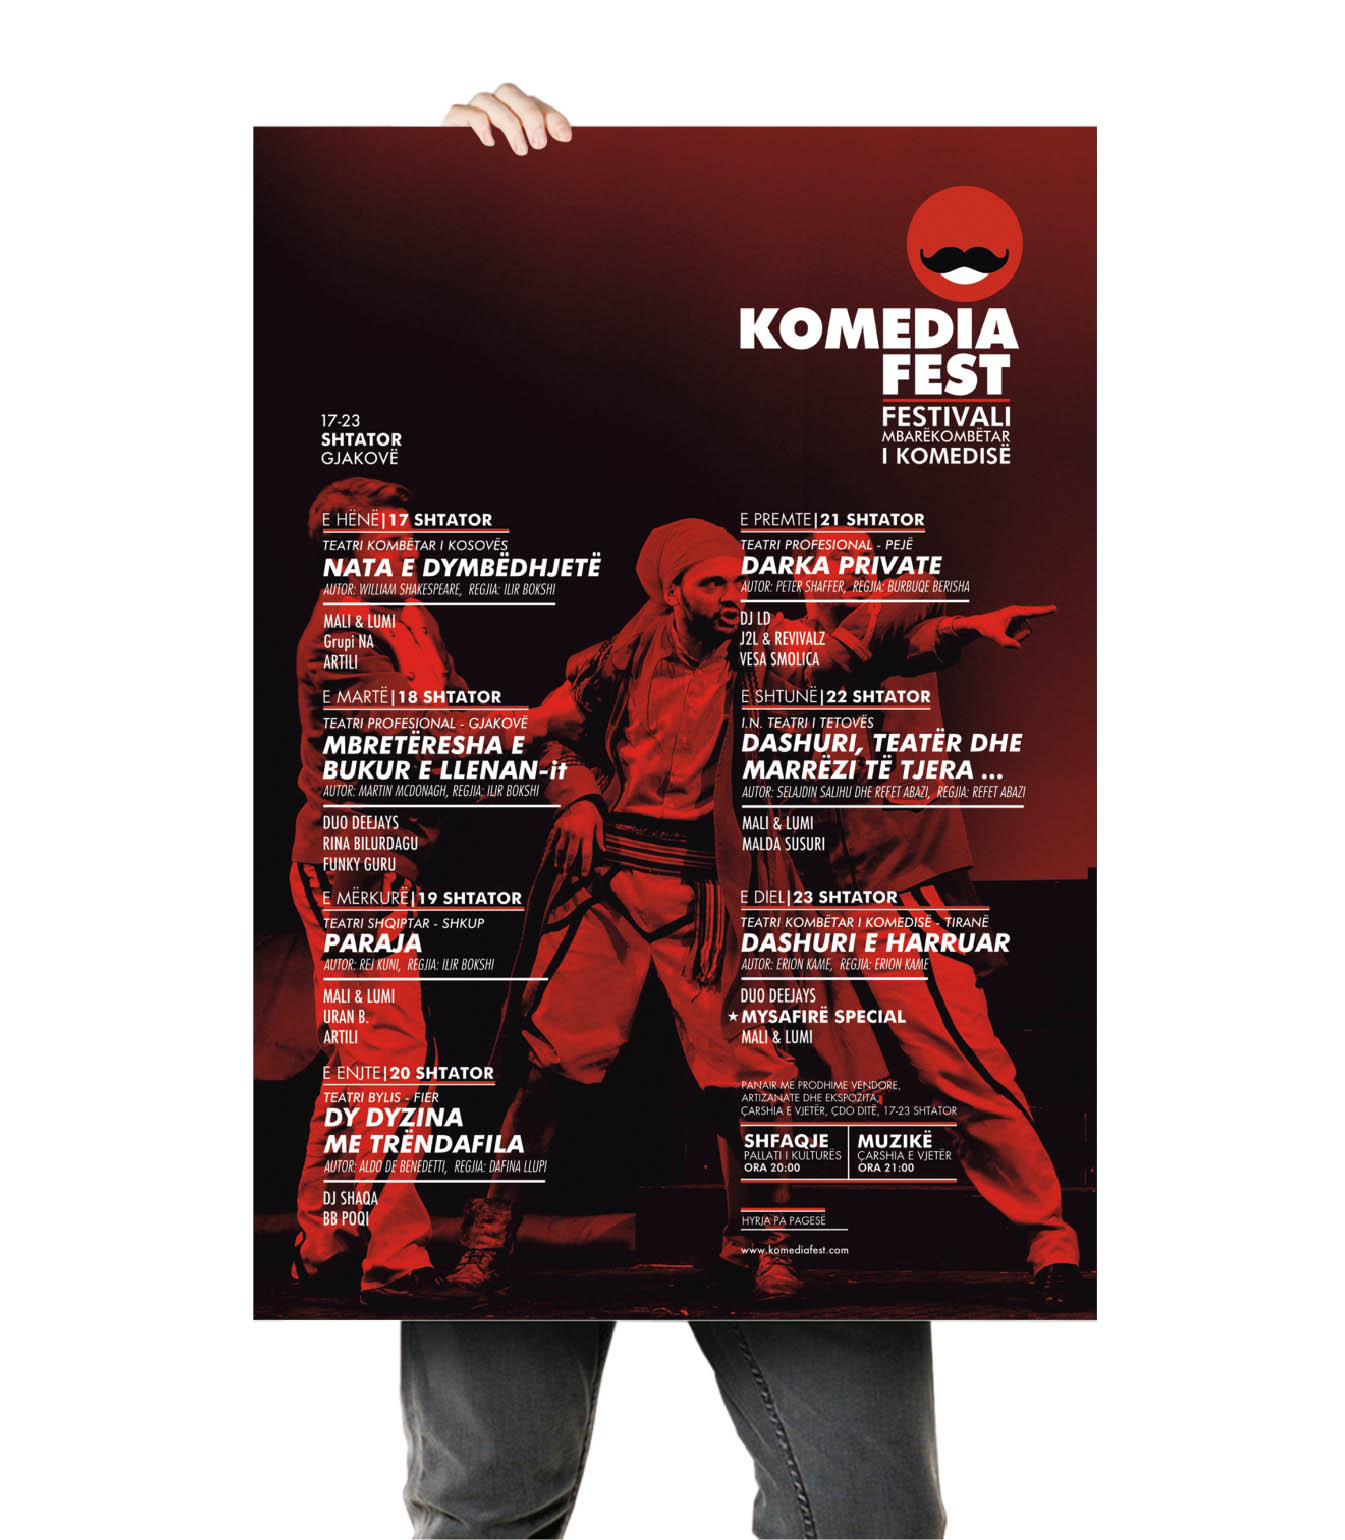 Lineup poster for Komedia Fest